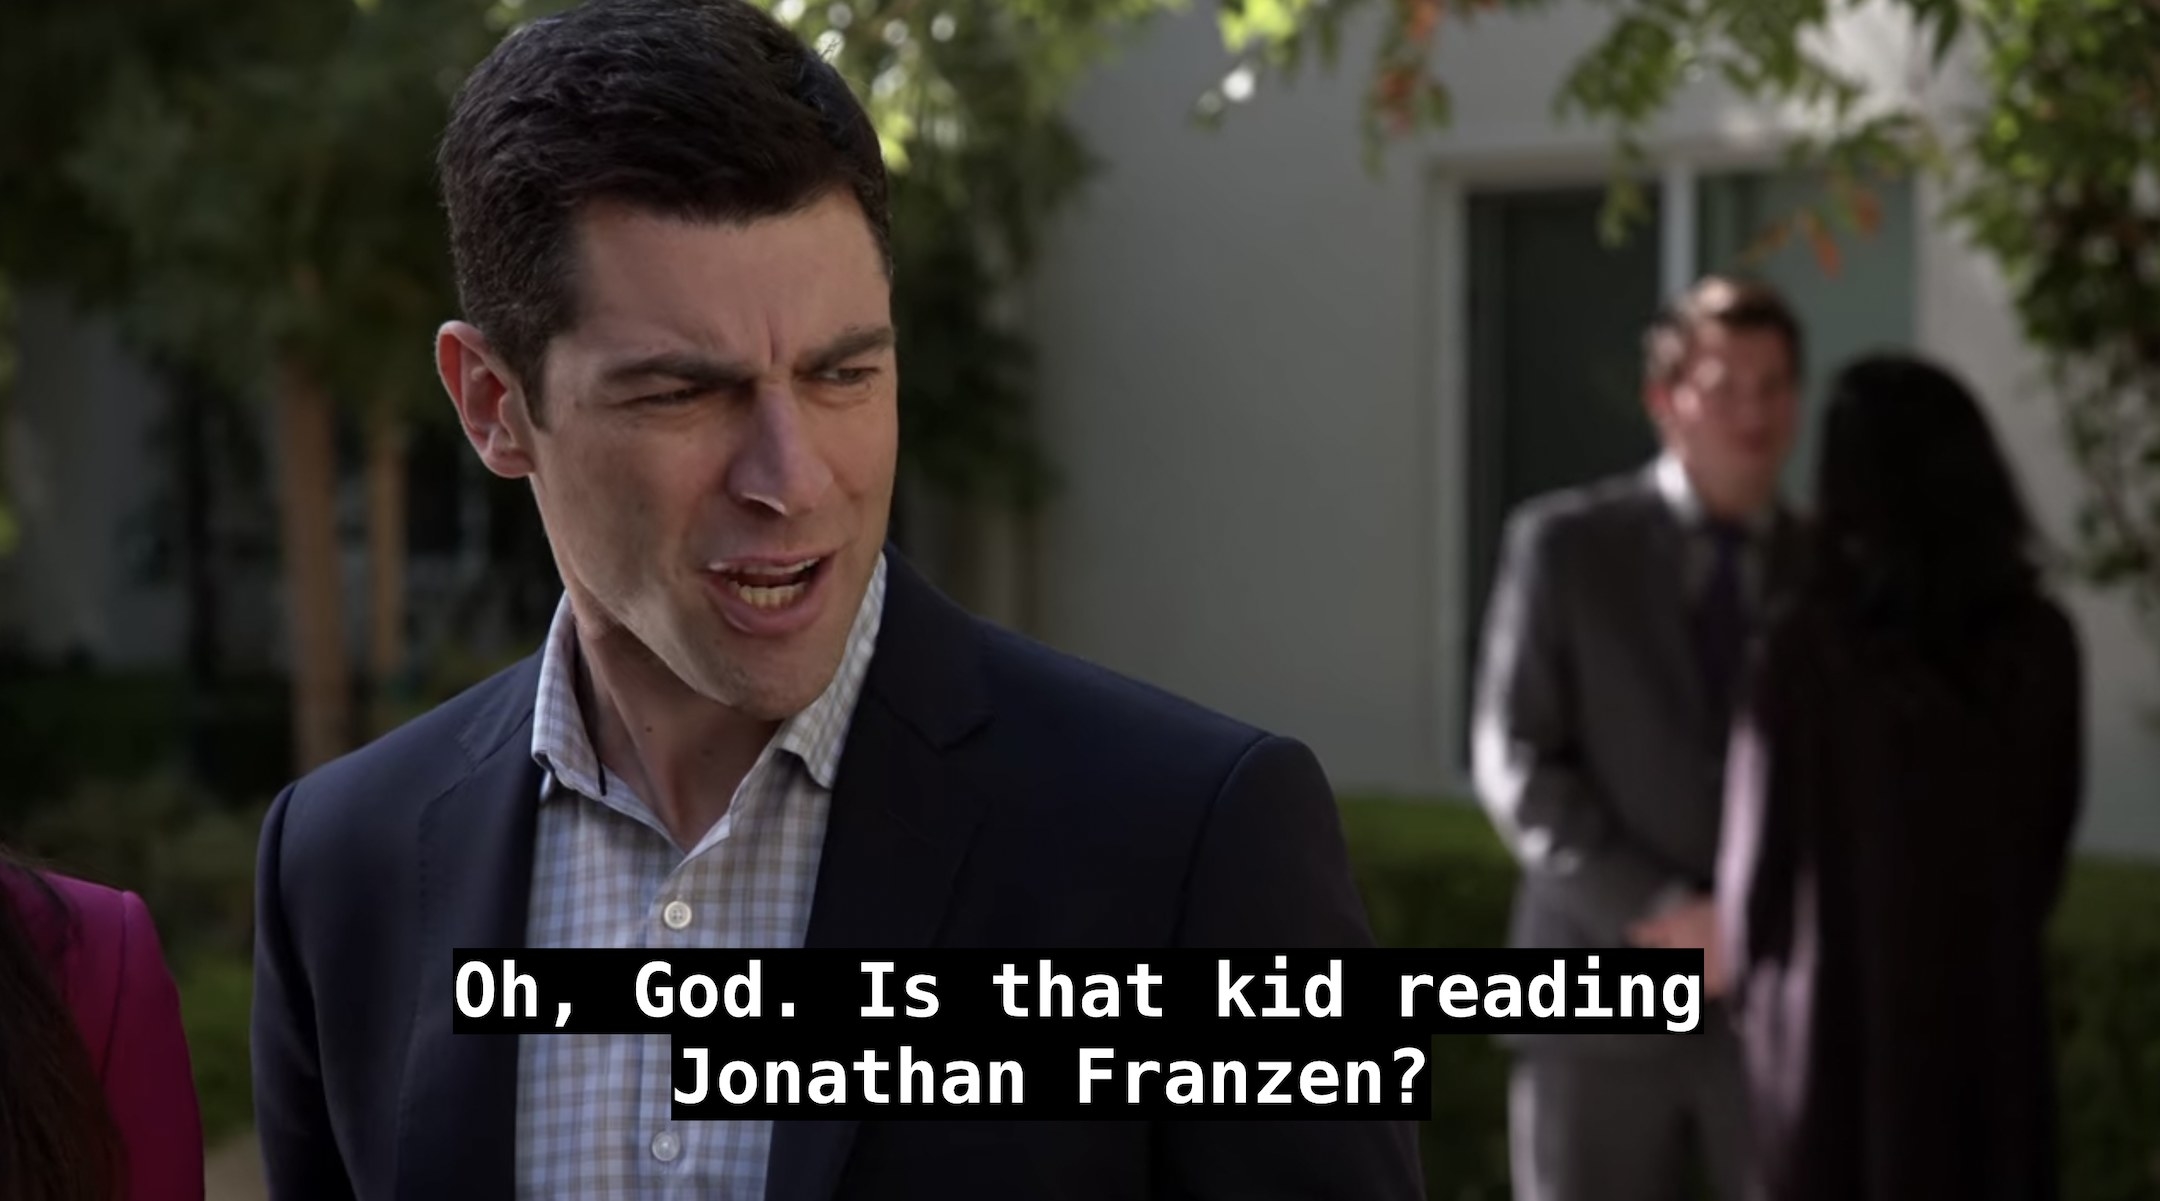 Schmidt says, Oh god, Is that kid reading Jonathan Franzen